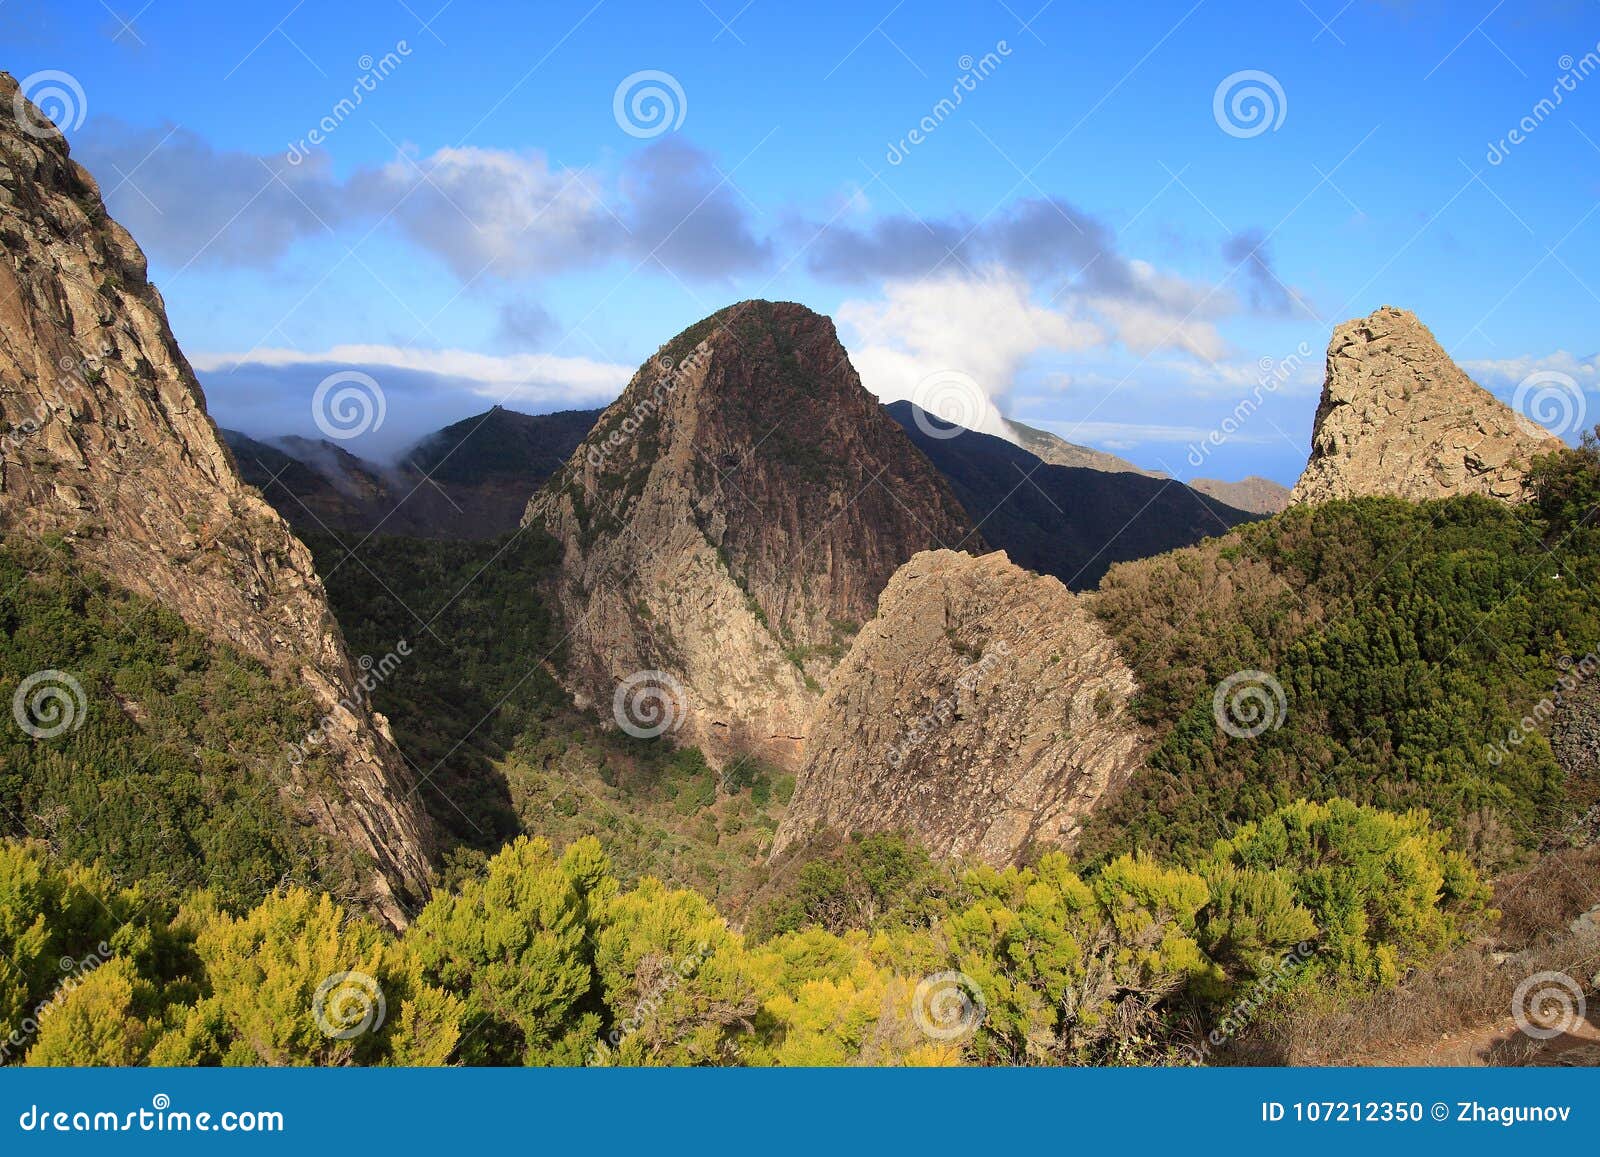 mountain landscape of the island of la gomera. canary islands. spain